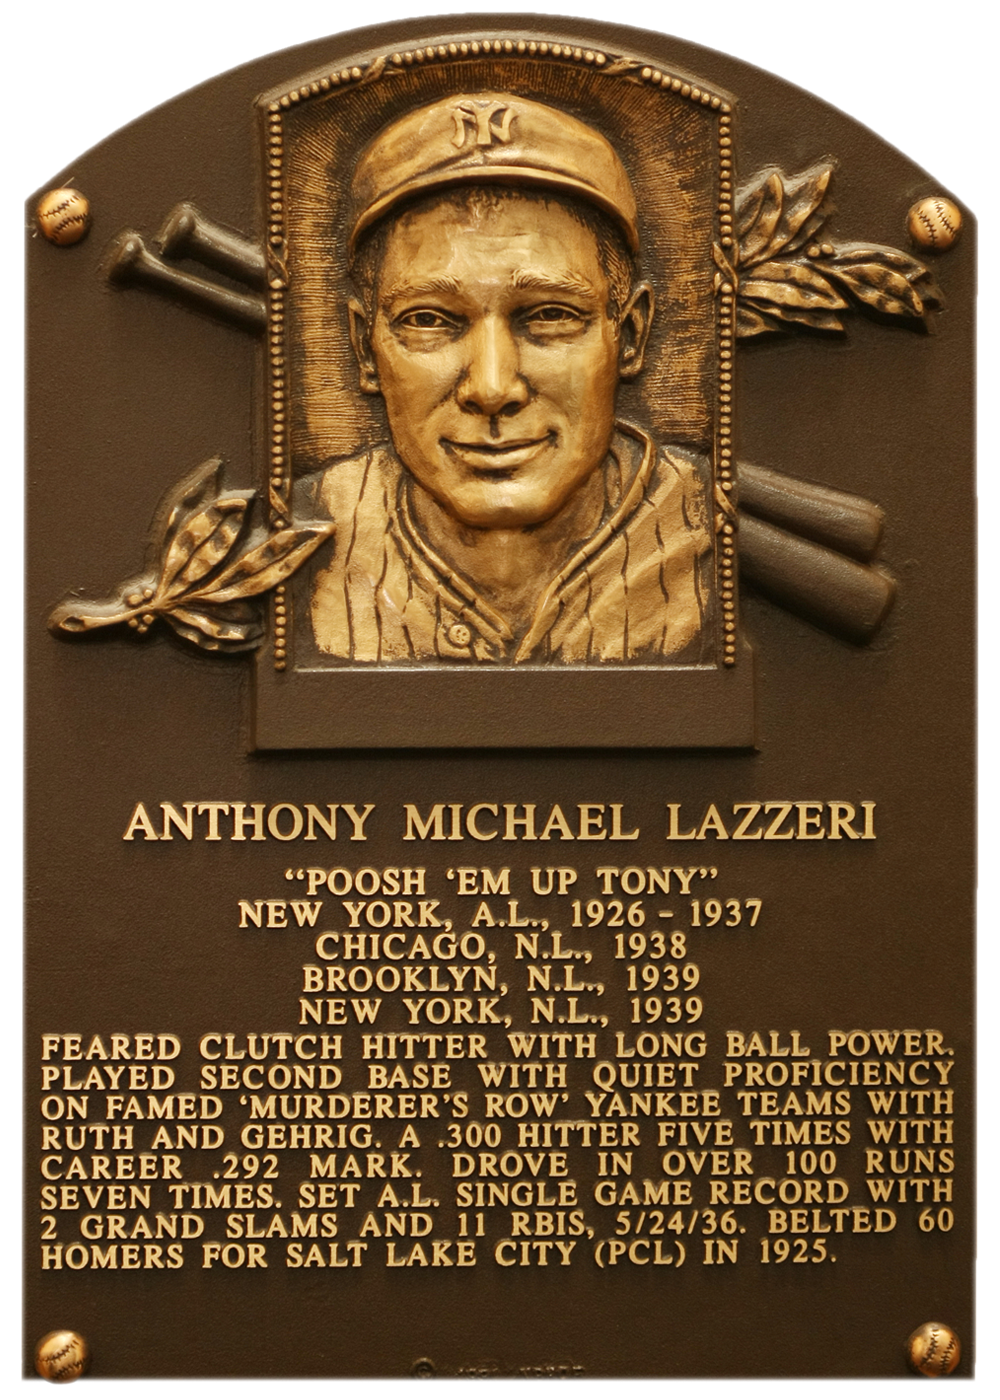 Tony Lazzeri Hall of Fame plaque